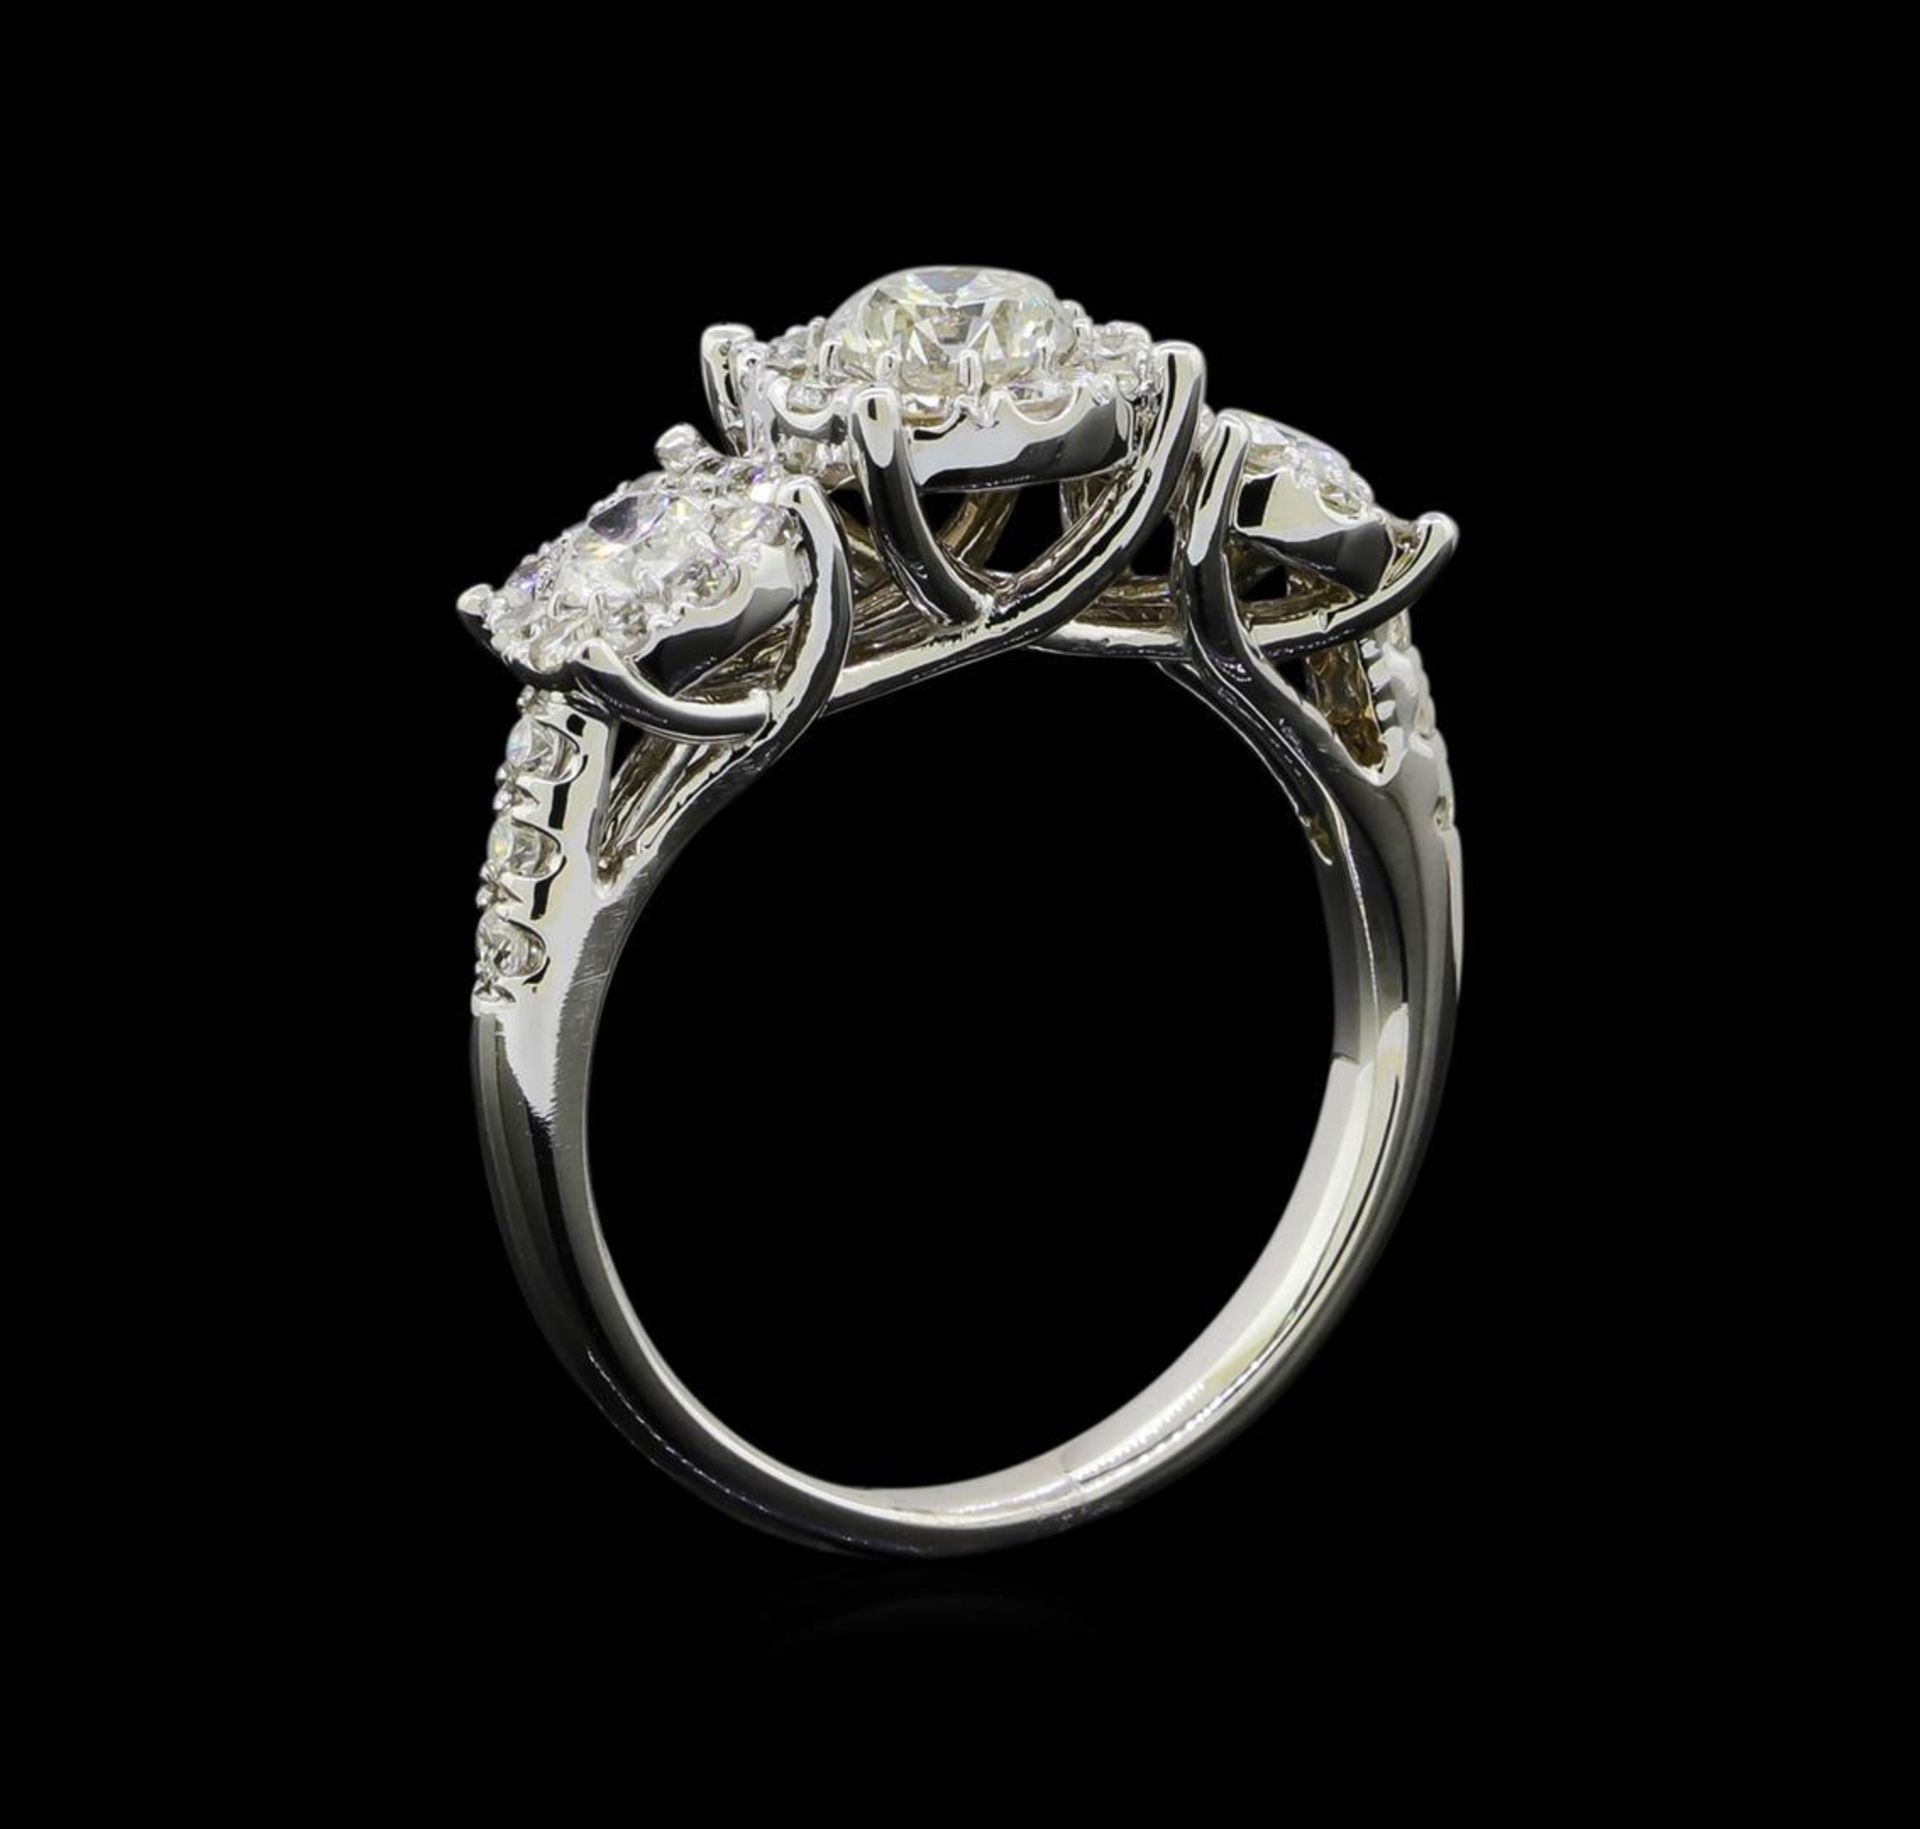 1.54 ctw Diamond Ring - 14KT White Gold - Image 4 of 5